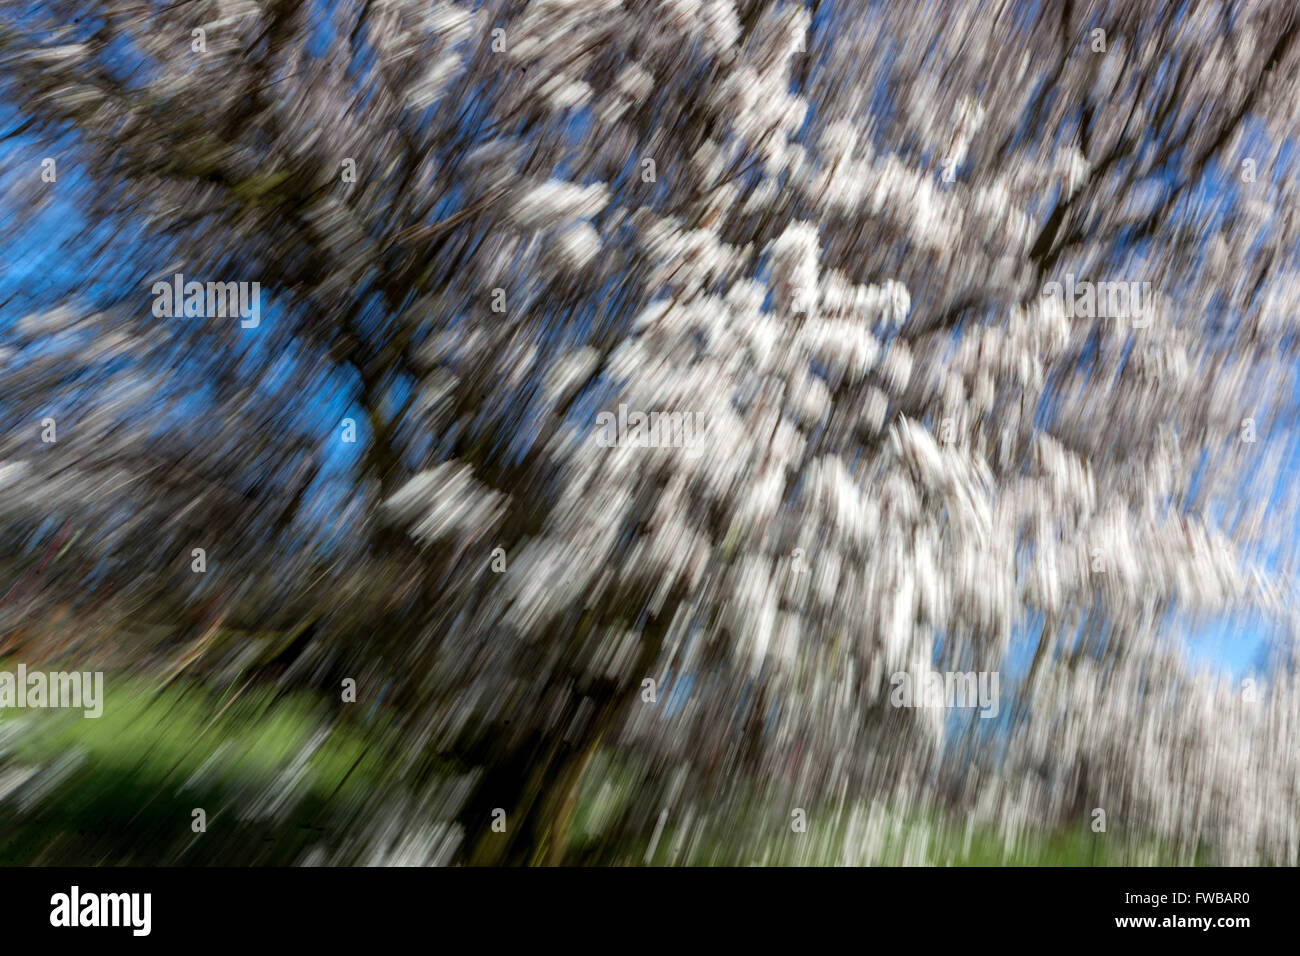 Prunus cerasifera 'Hessei', ciruela mirobalana, floreciendo ramas de árboles borrosa en movimiento, atmósfera de primavera Foto de stock